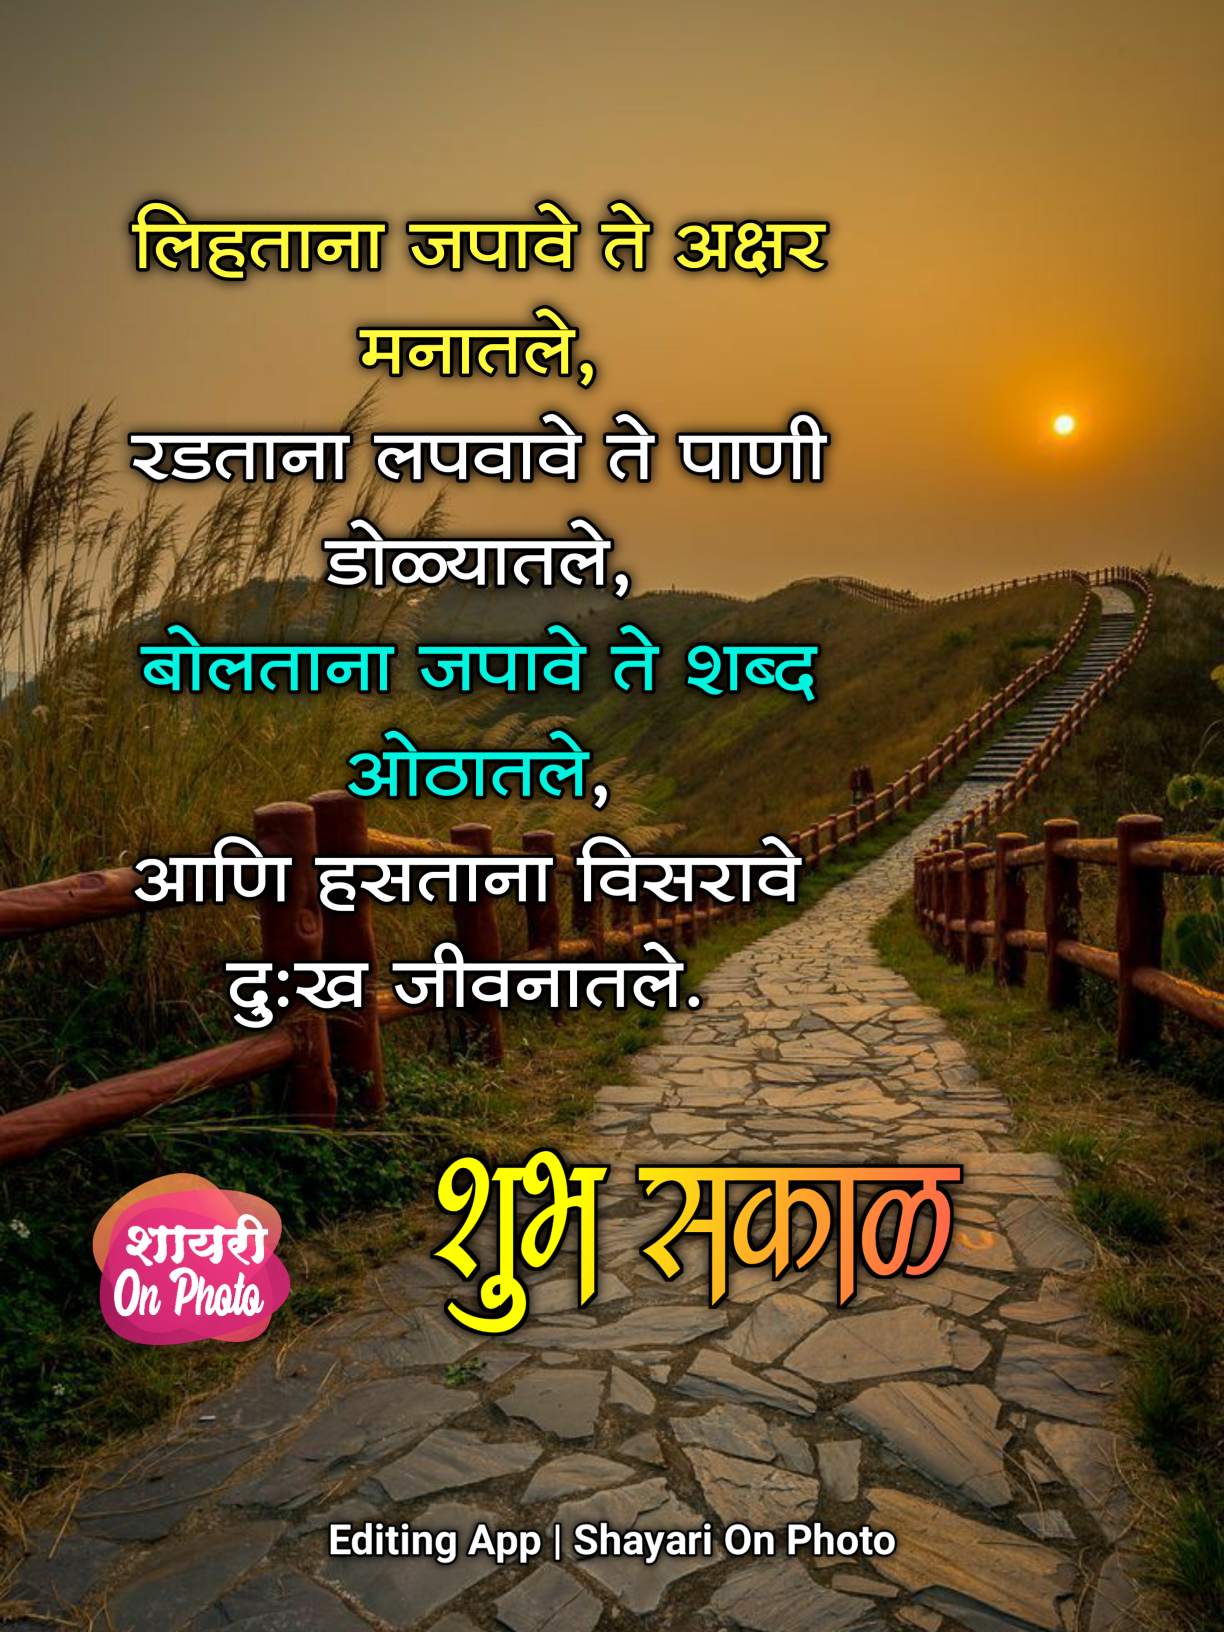 shubh sakal motivational quotes in marathi